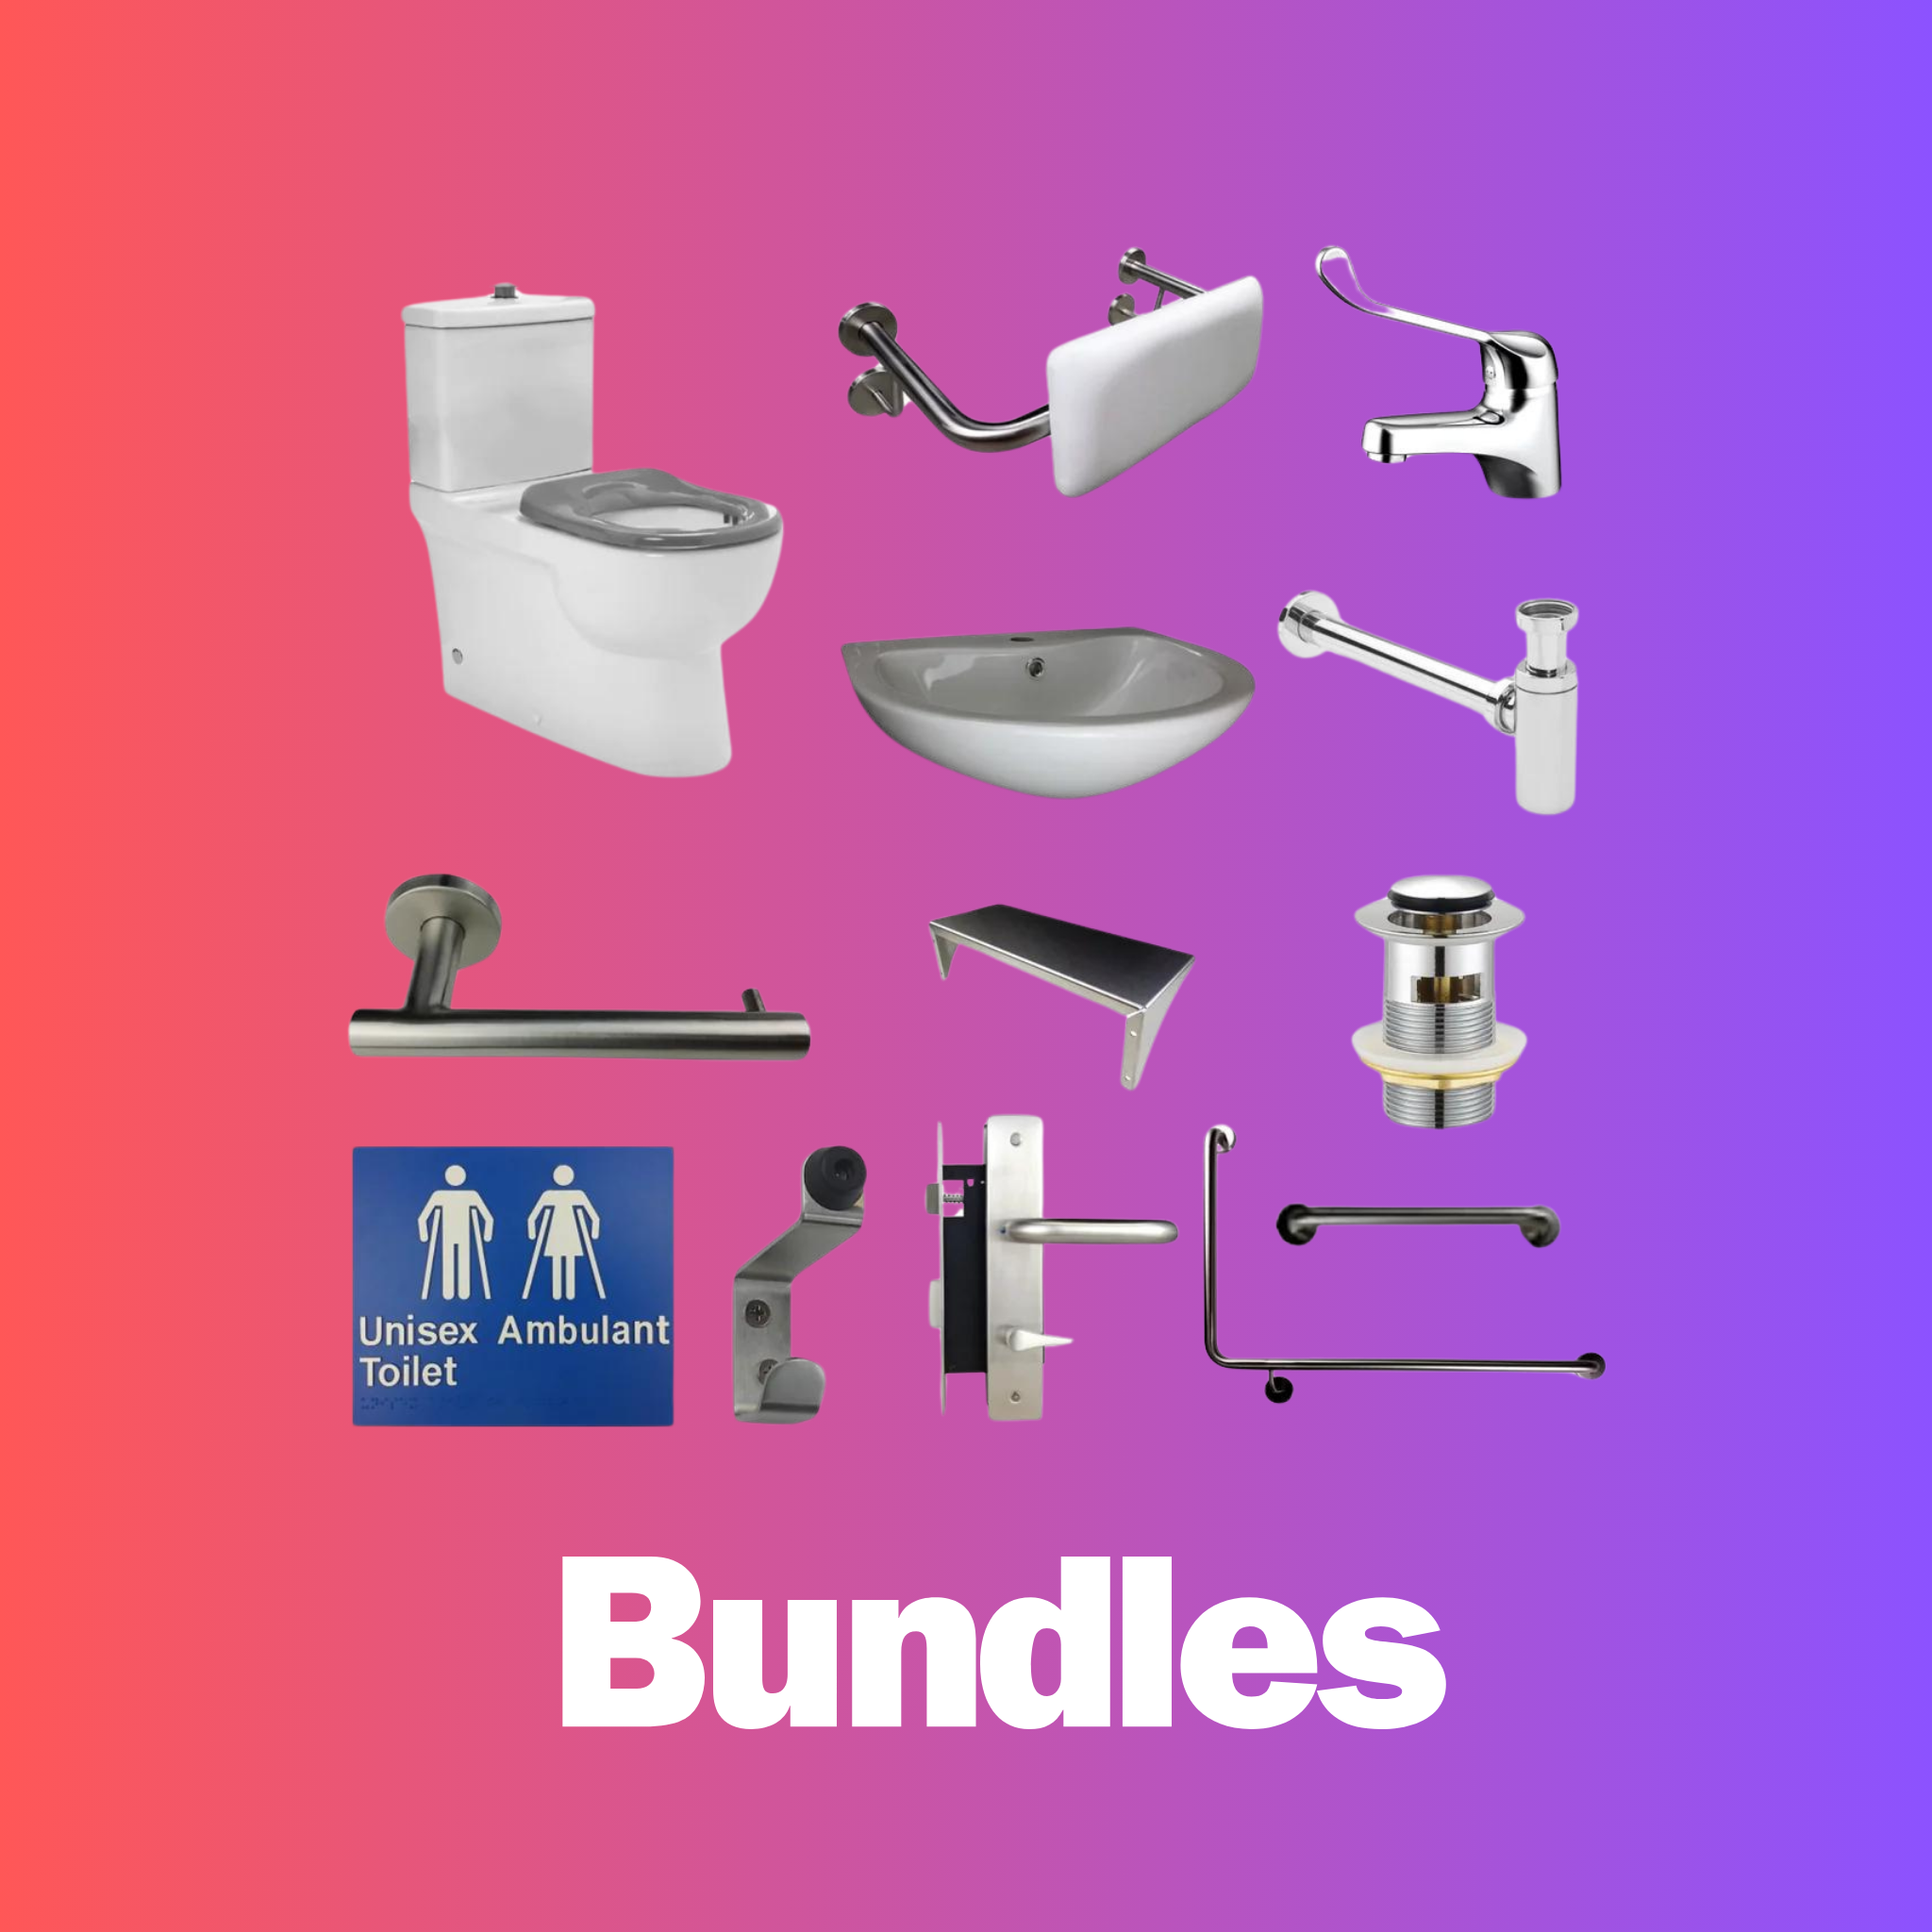 Disabled and Ambulant Bathroom bundles